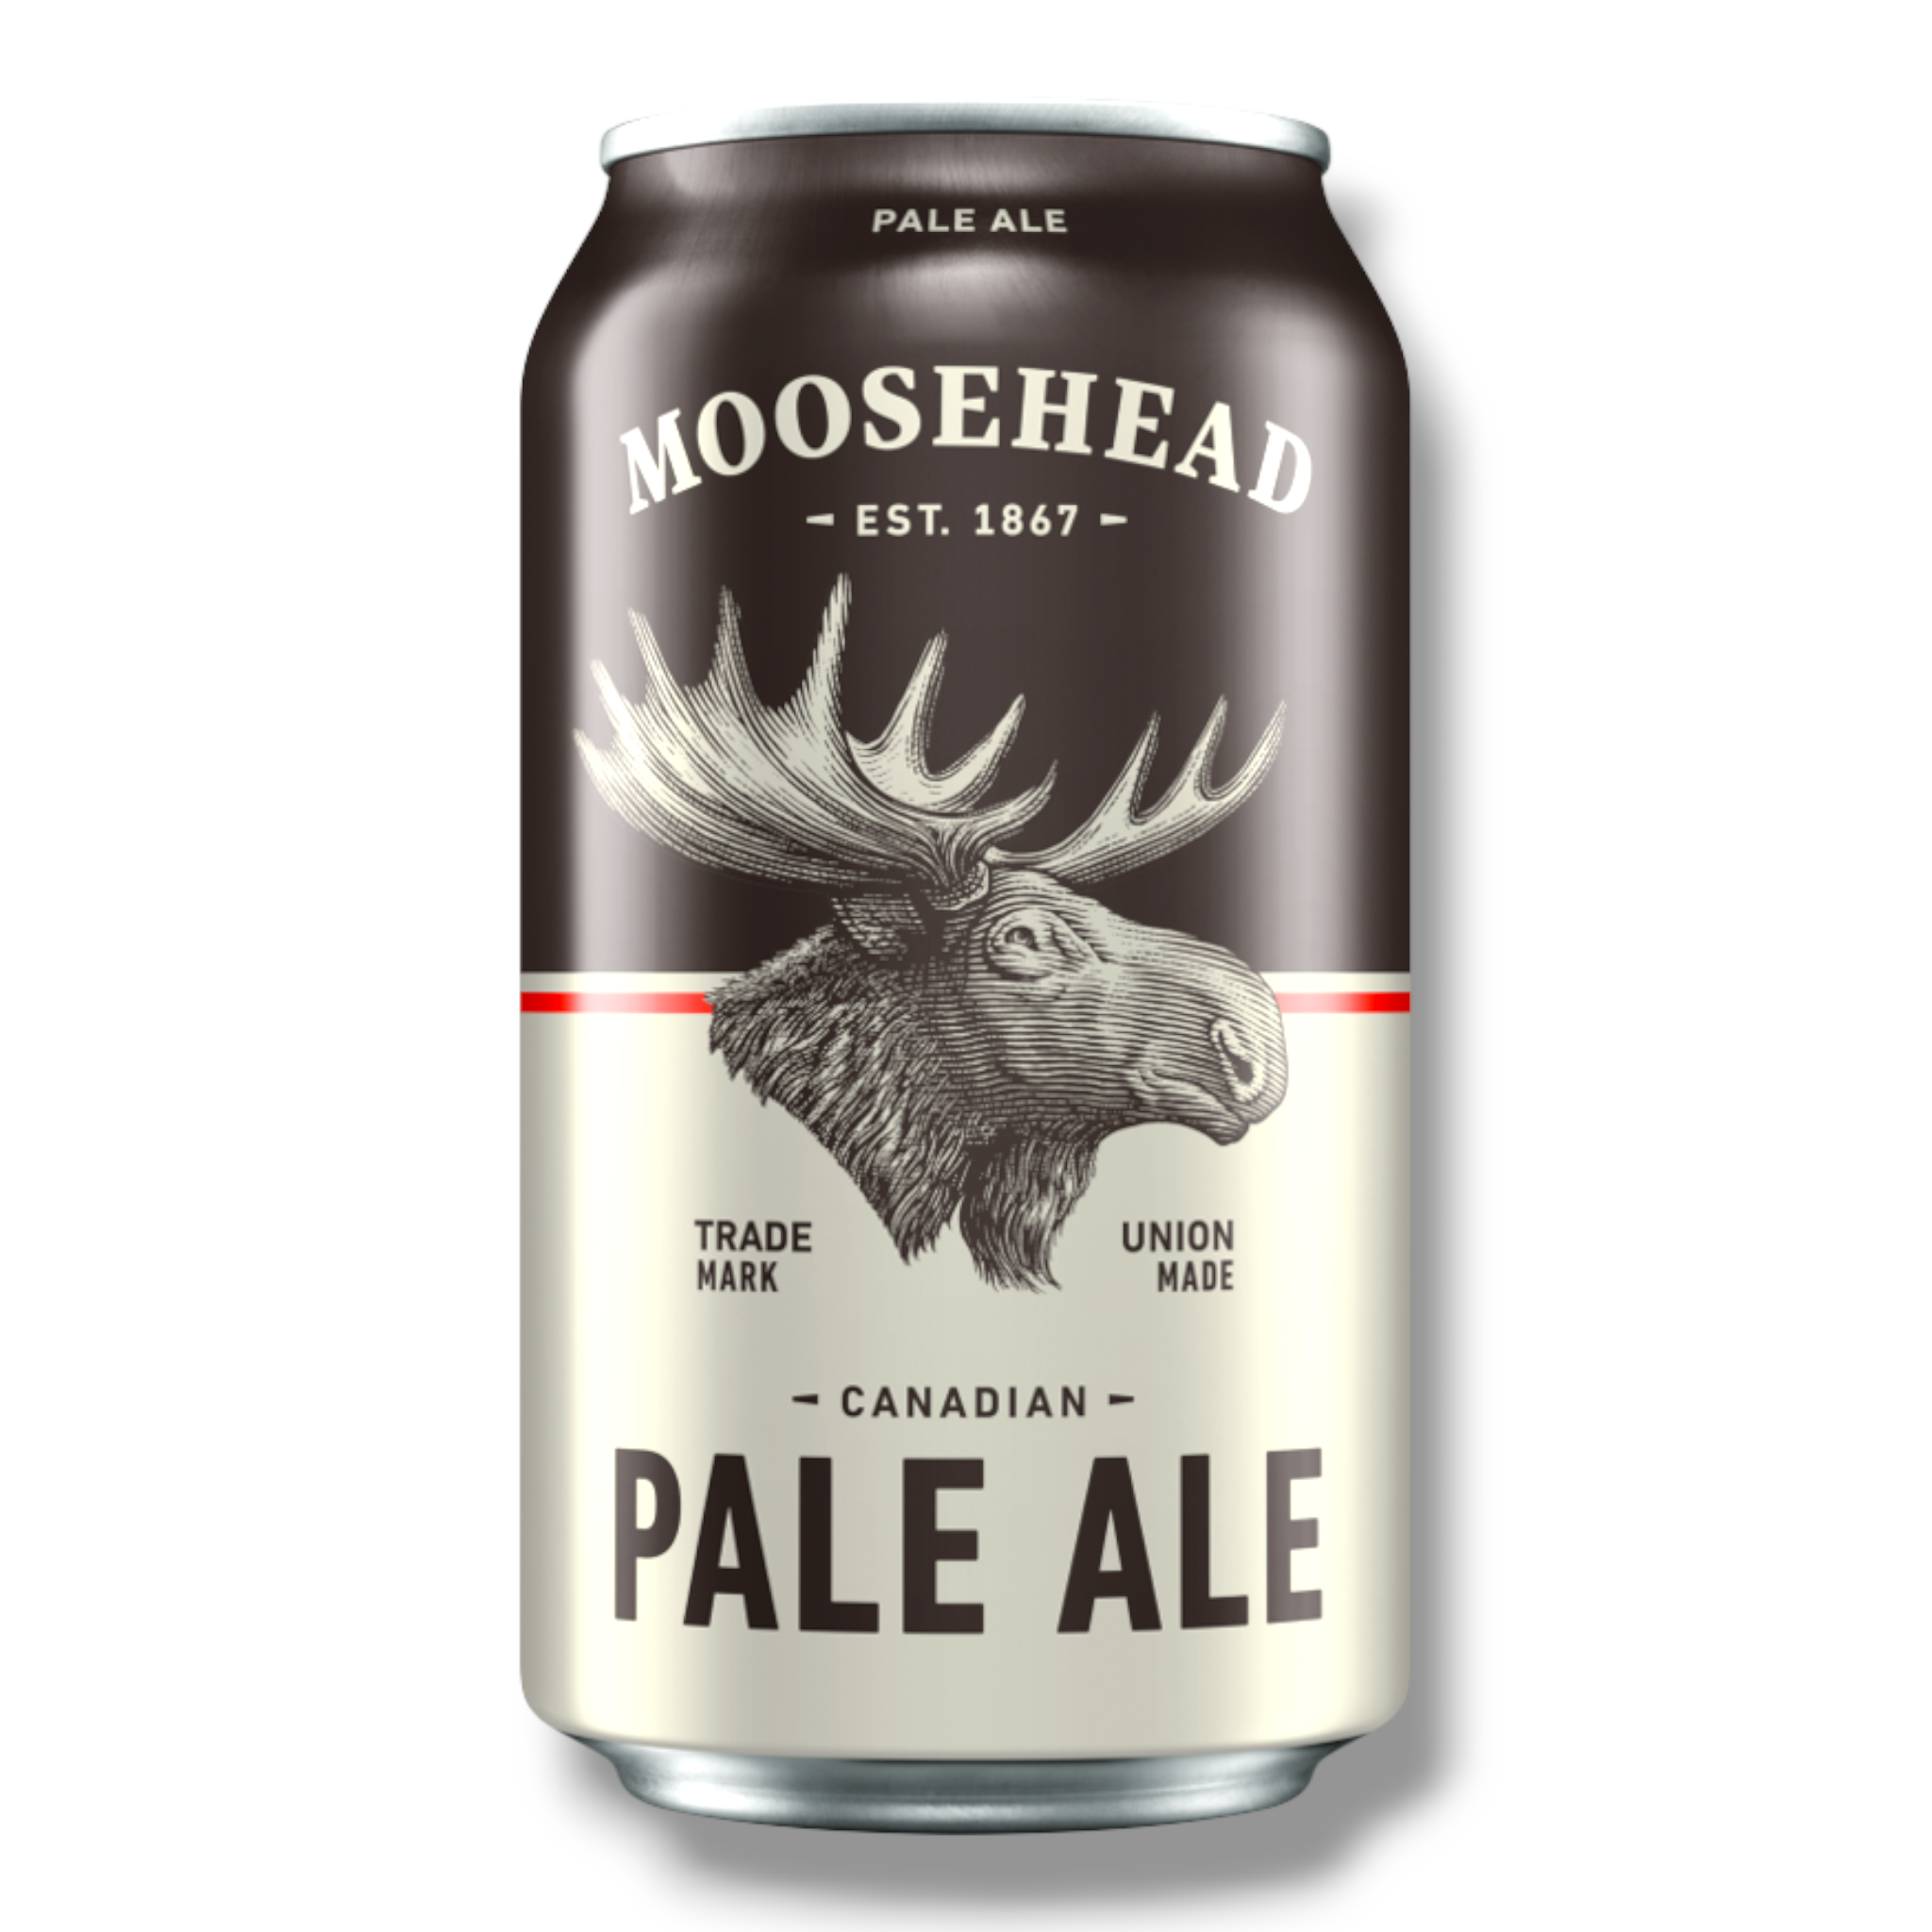 Moosehead Pale Ale Dose 0,35l - Das Pale Ale aus Kanada mit 5% Vol.